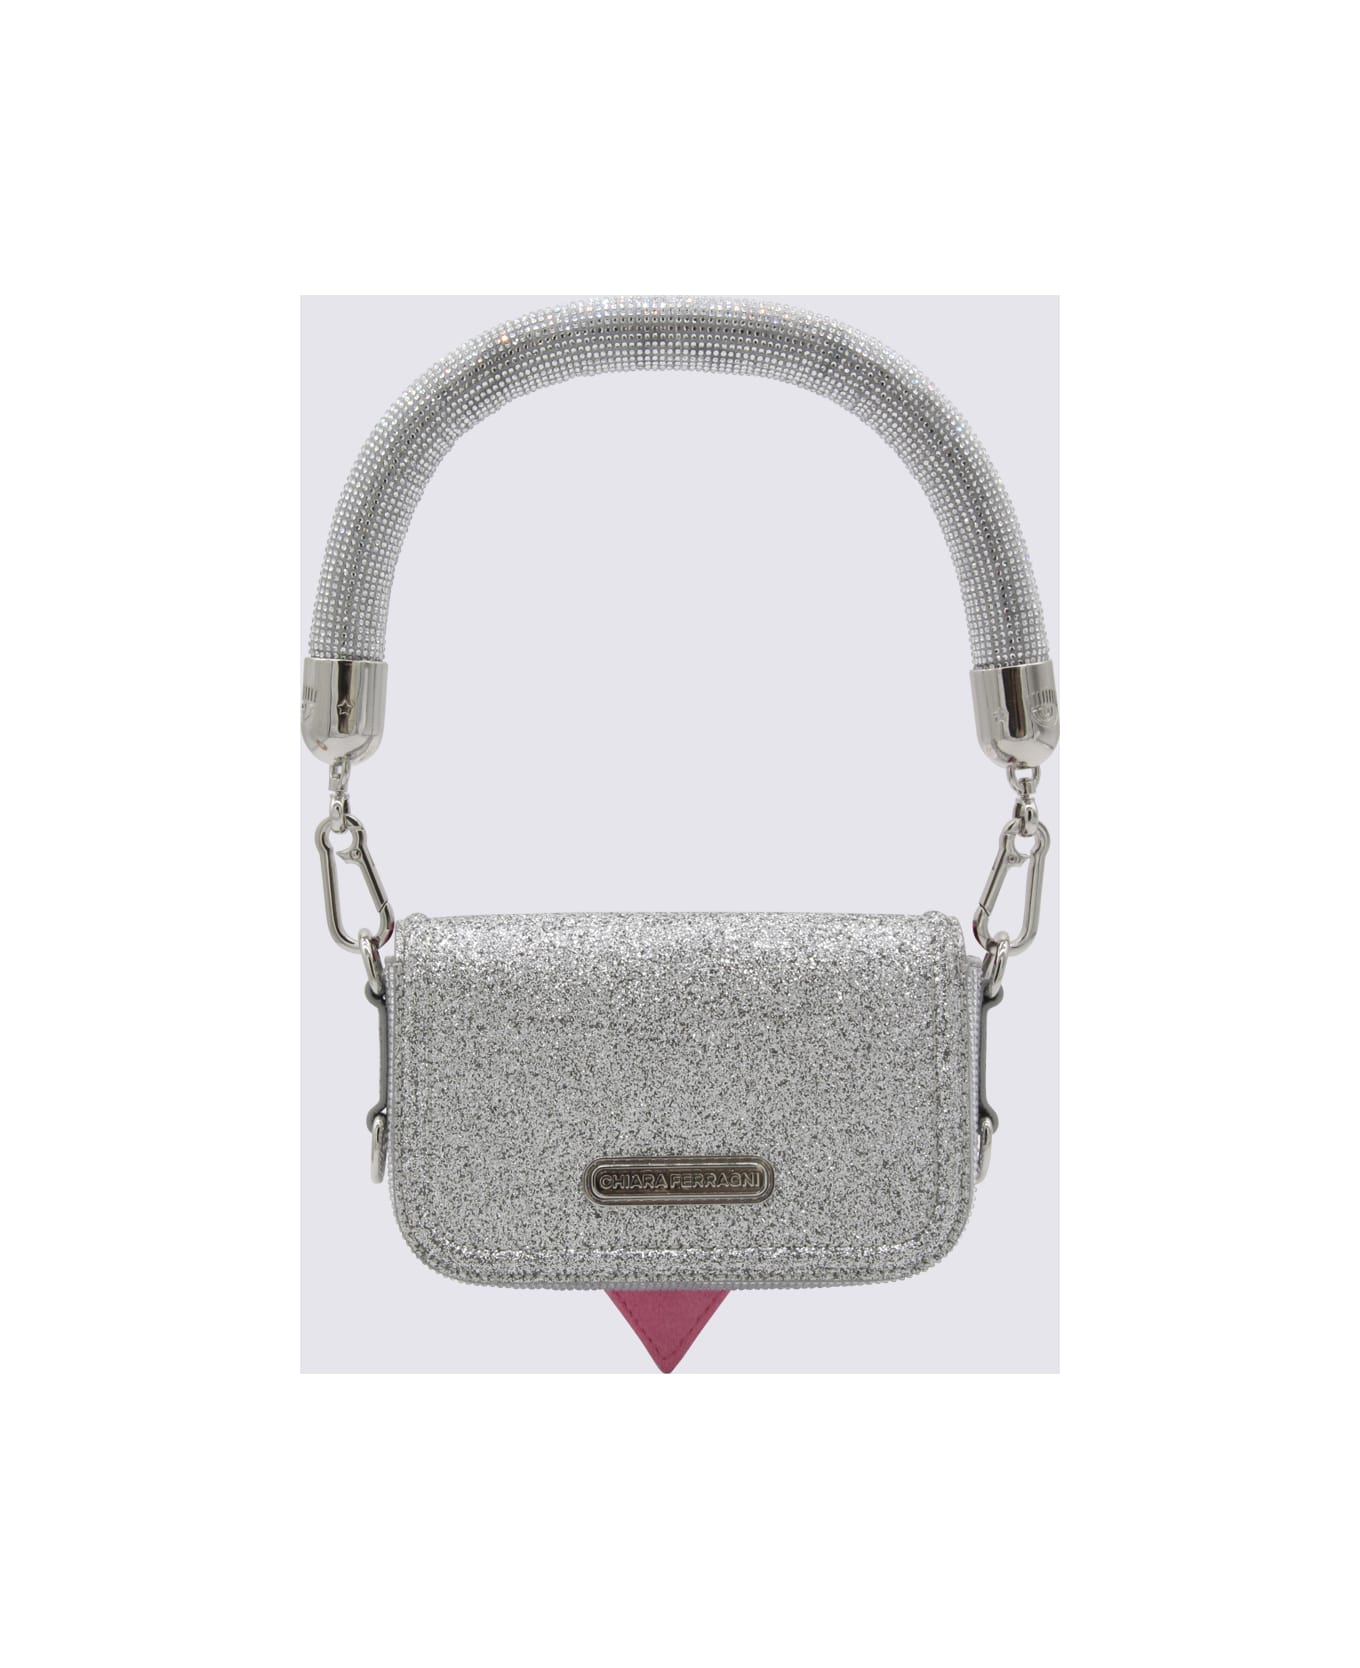 Chiara Ferragni Silver Glittery Shoulder Bag - Silver